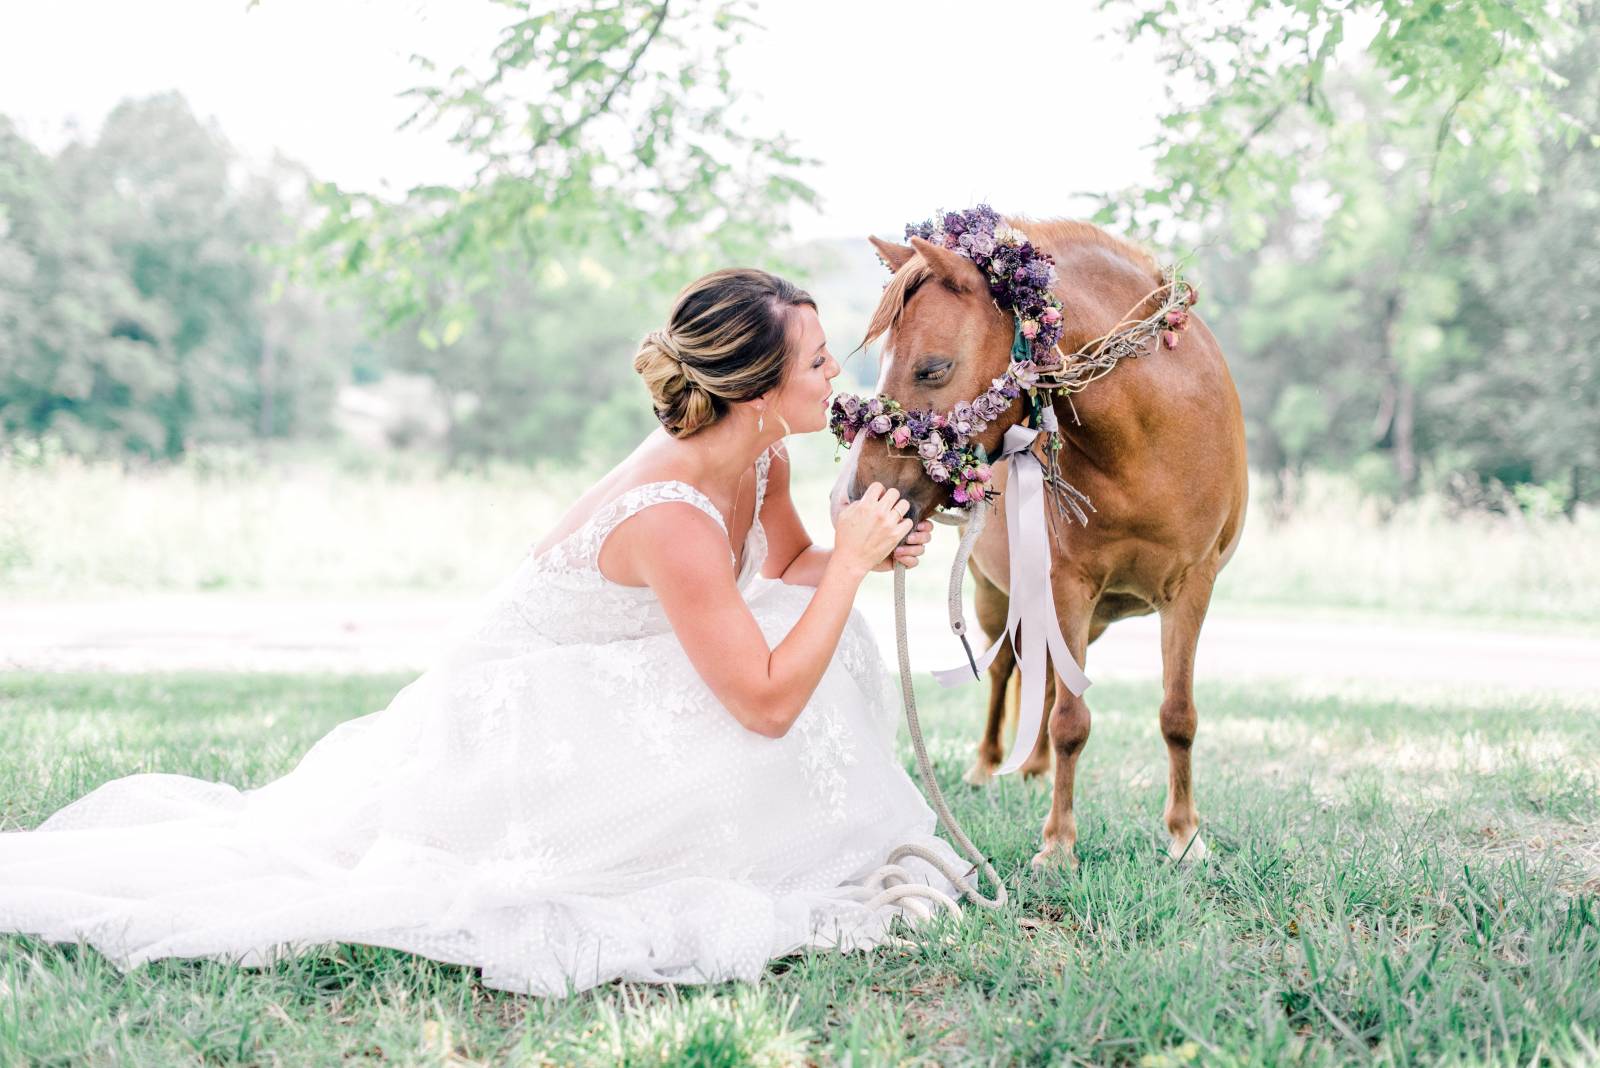 Bridal portrait with horse